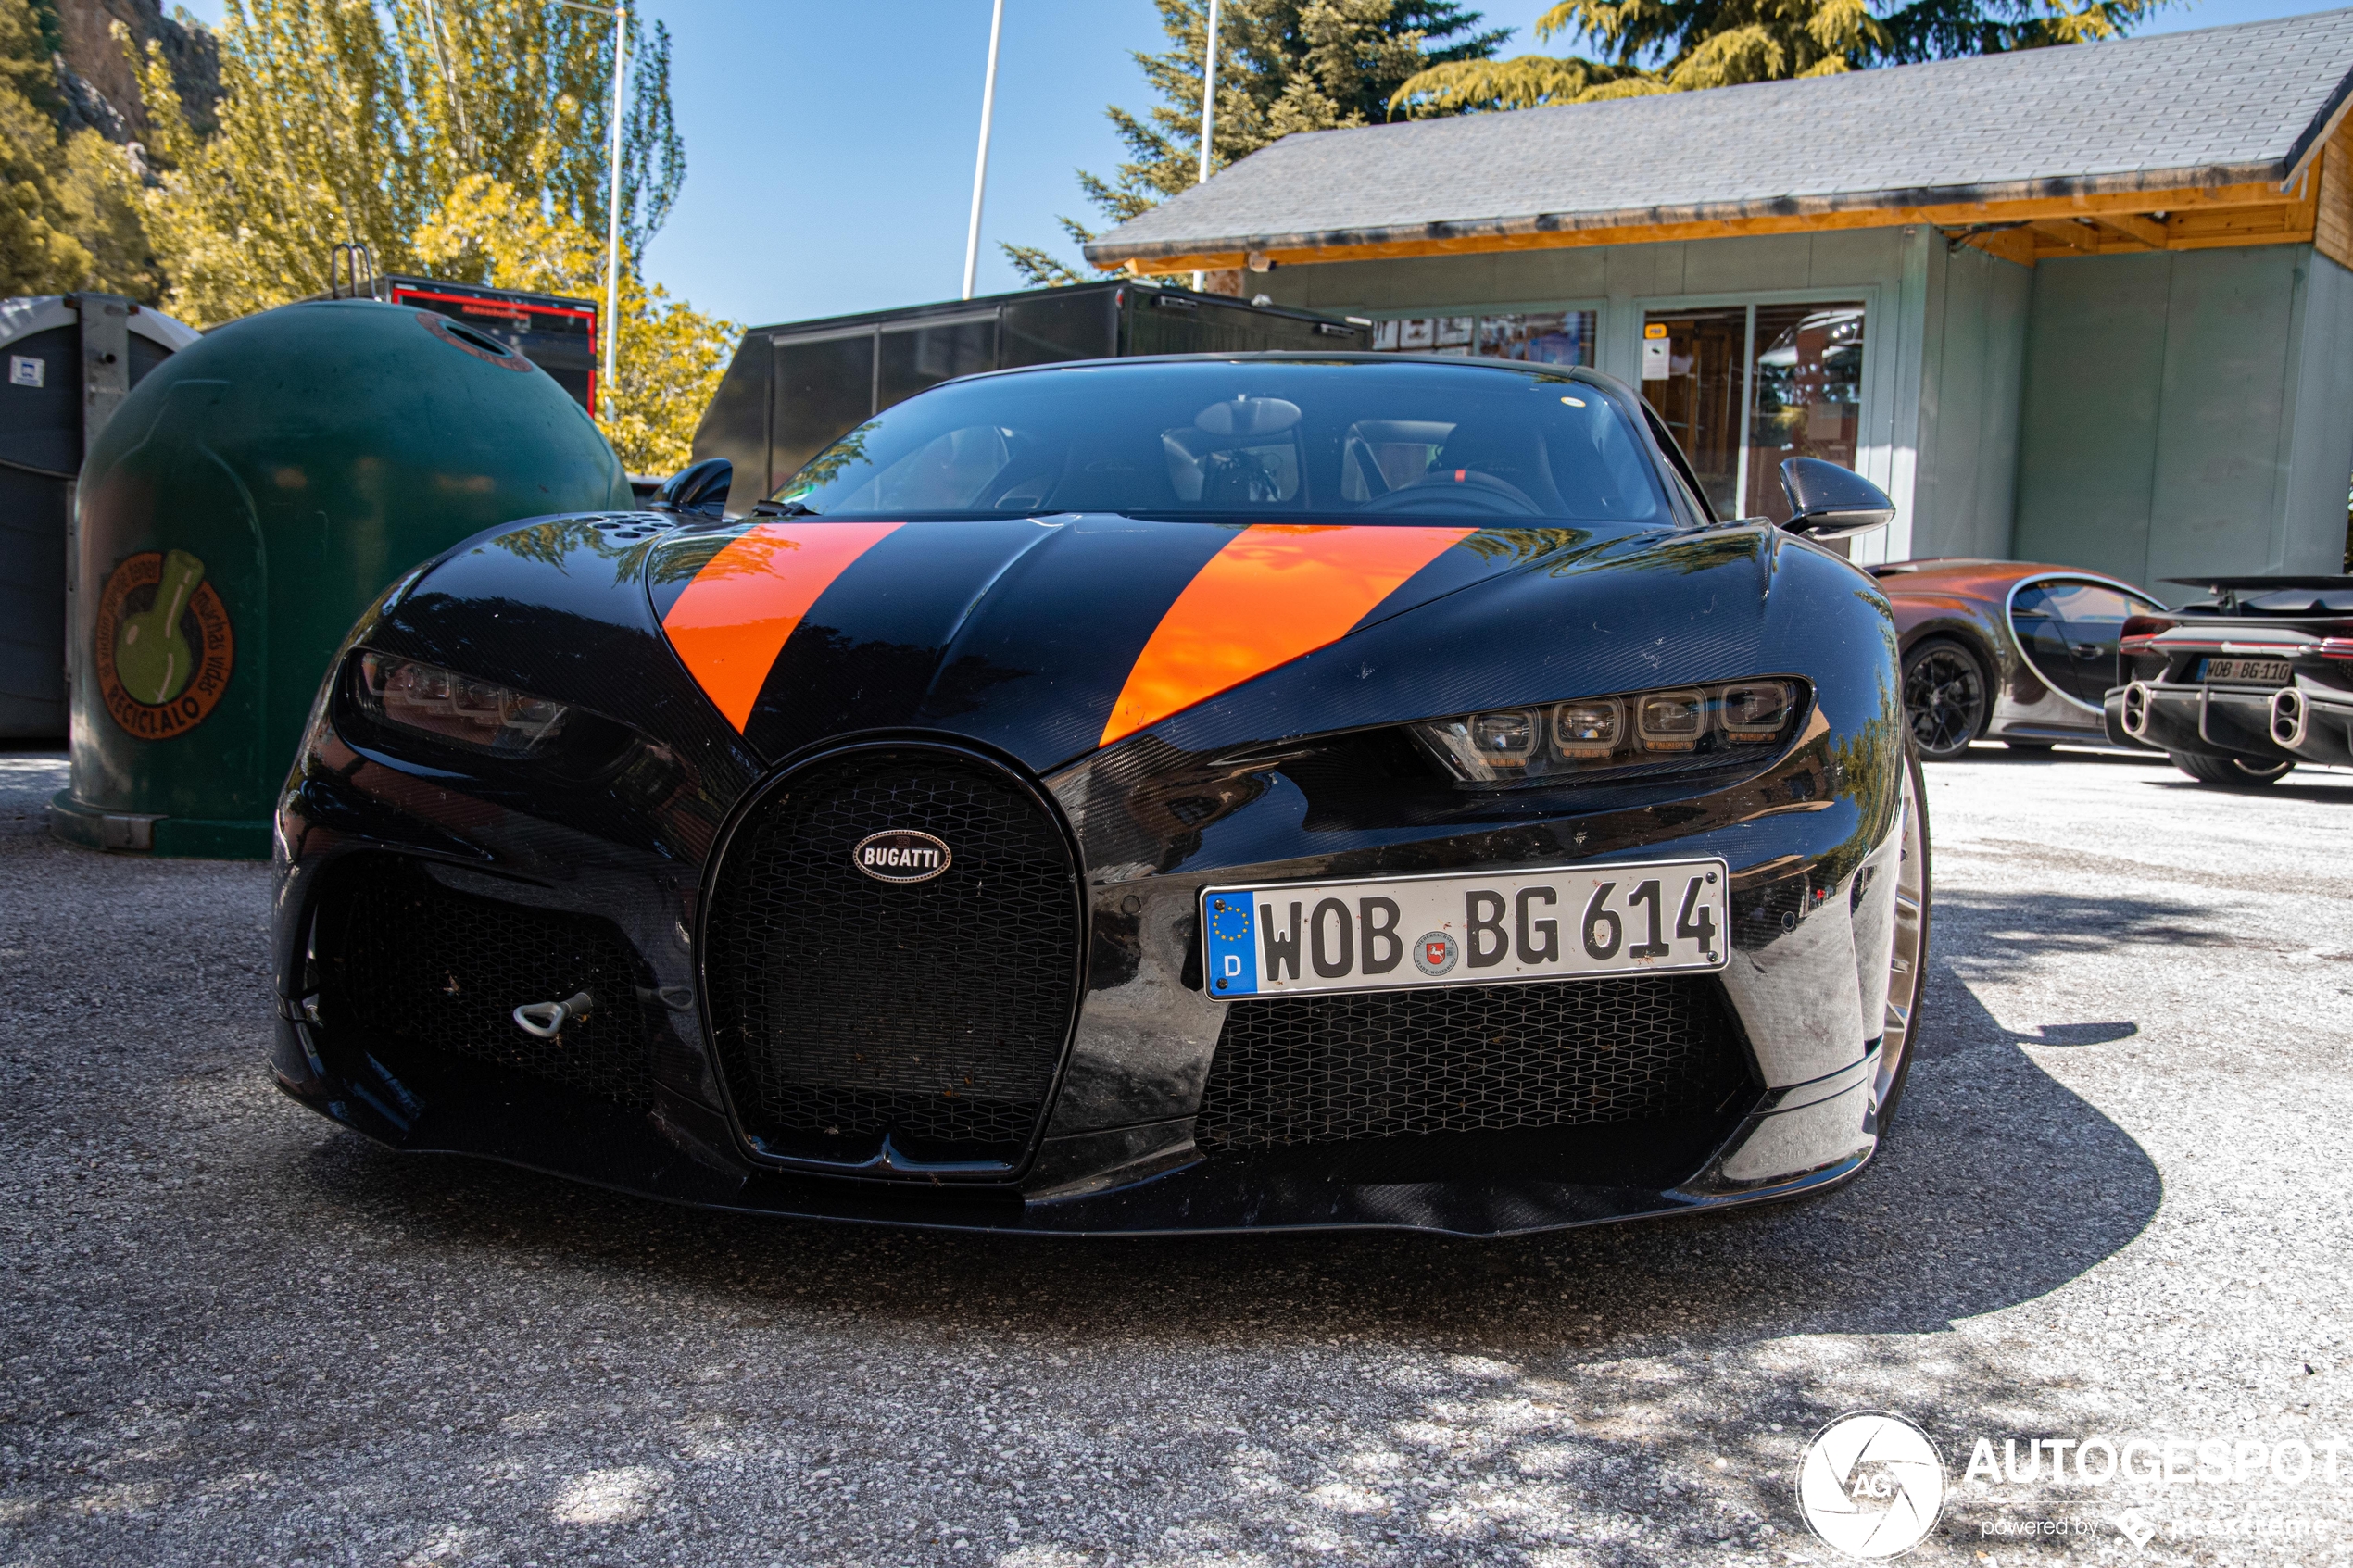 Bugatti trio turns up in Spain